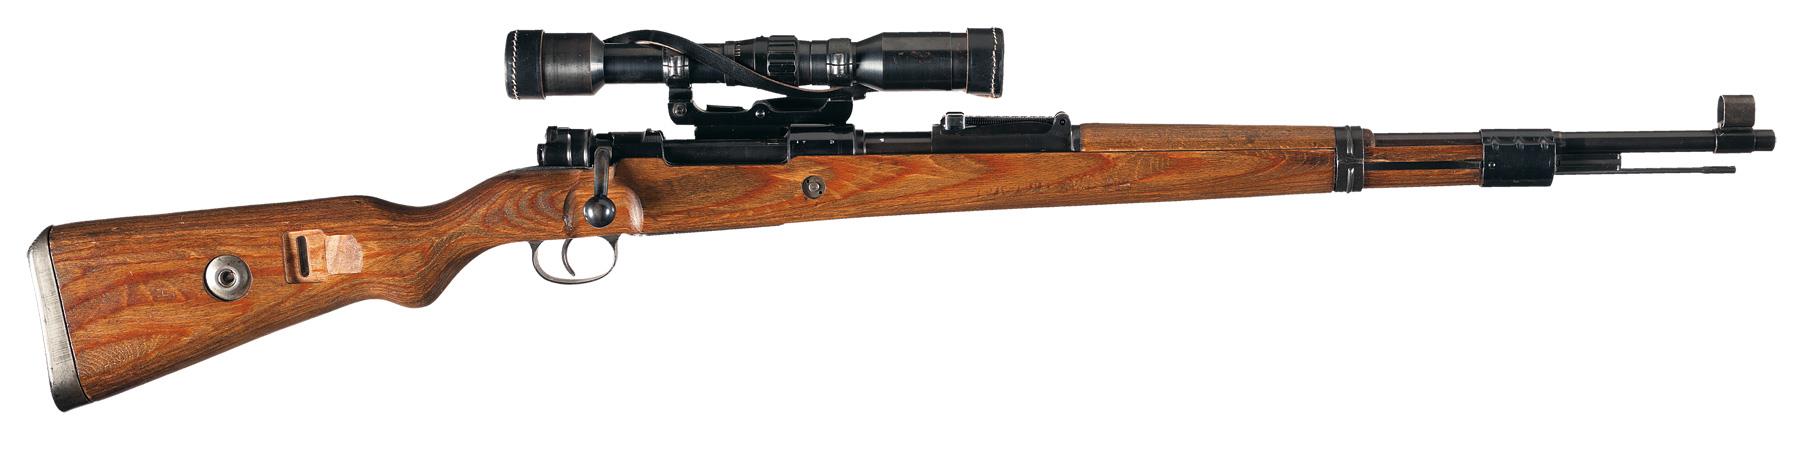 Mauser 98K-Rifle 7.92 mm Mauser | Rock Island Auction